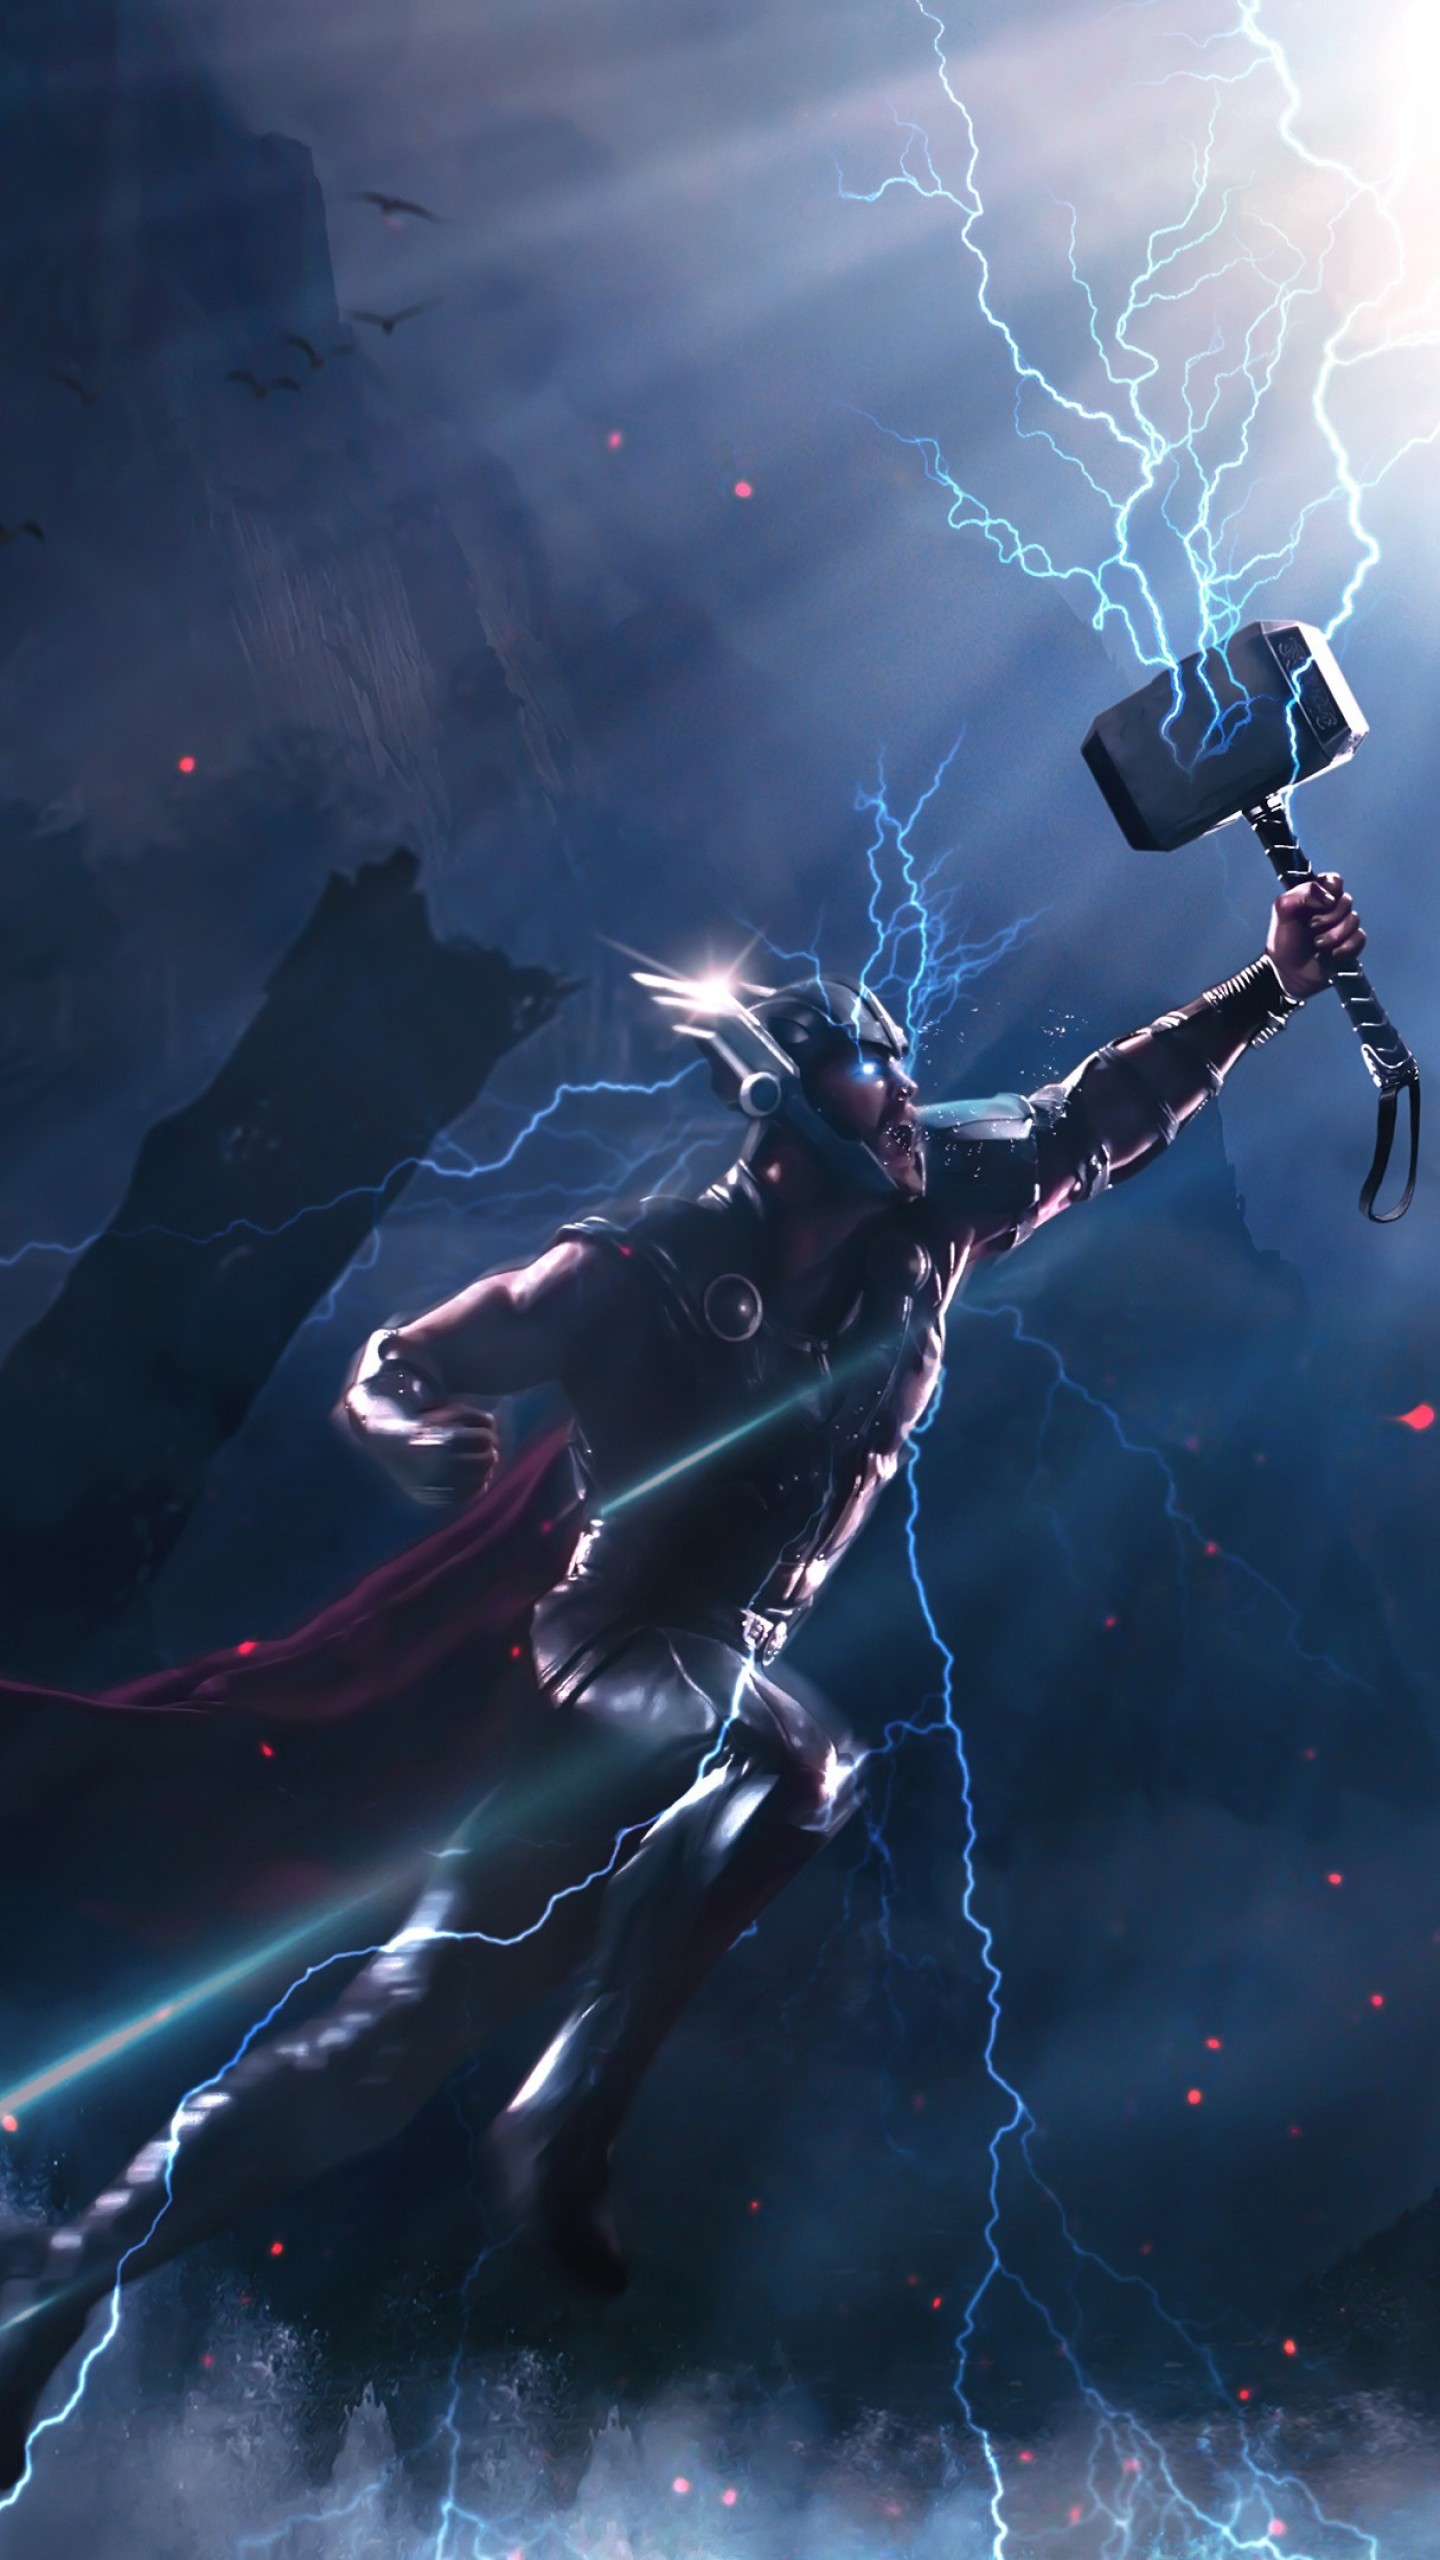 God Of War 5 Thor - 1440x2560 Wallpaper - teahub.io